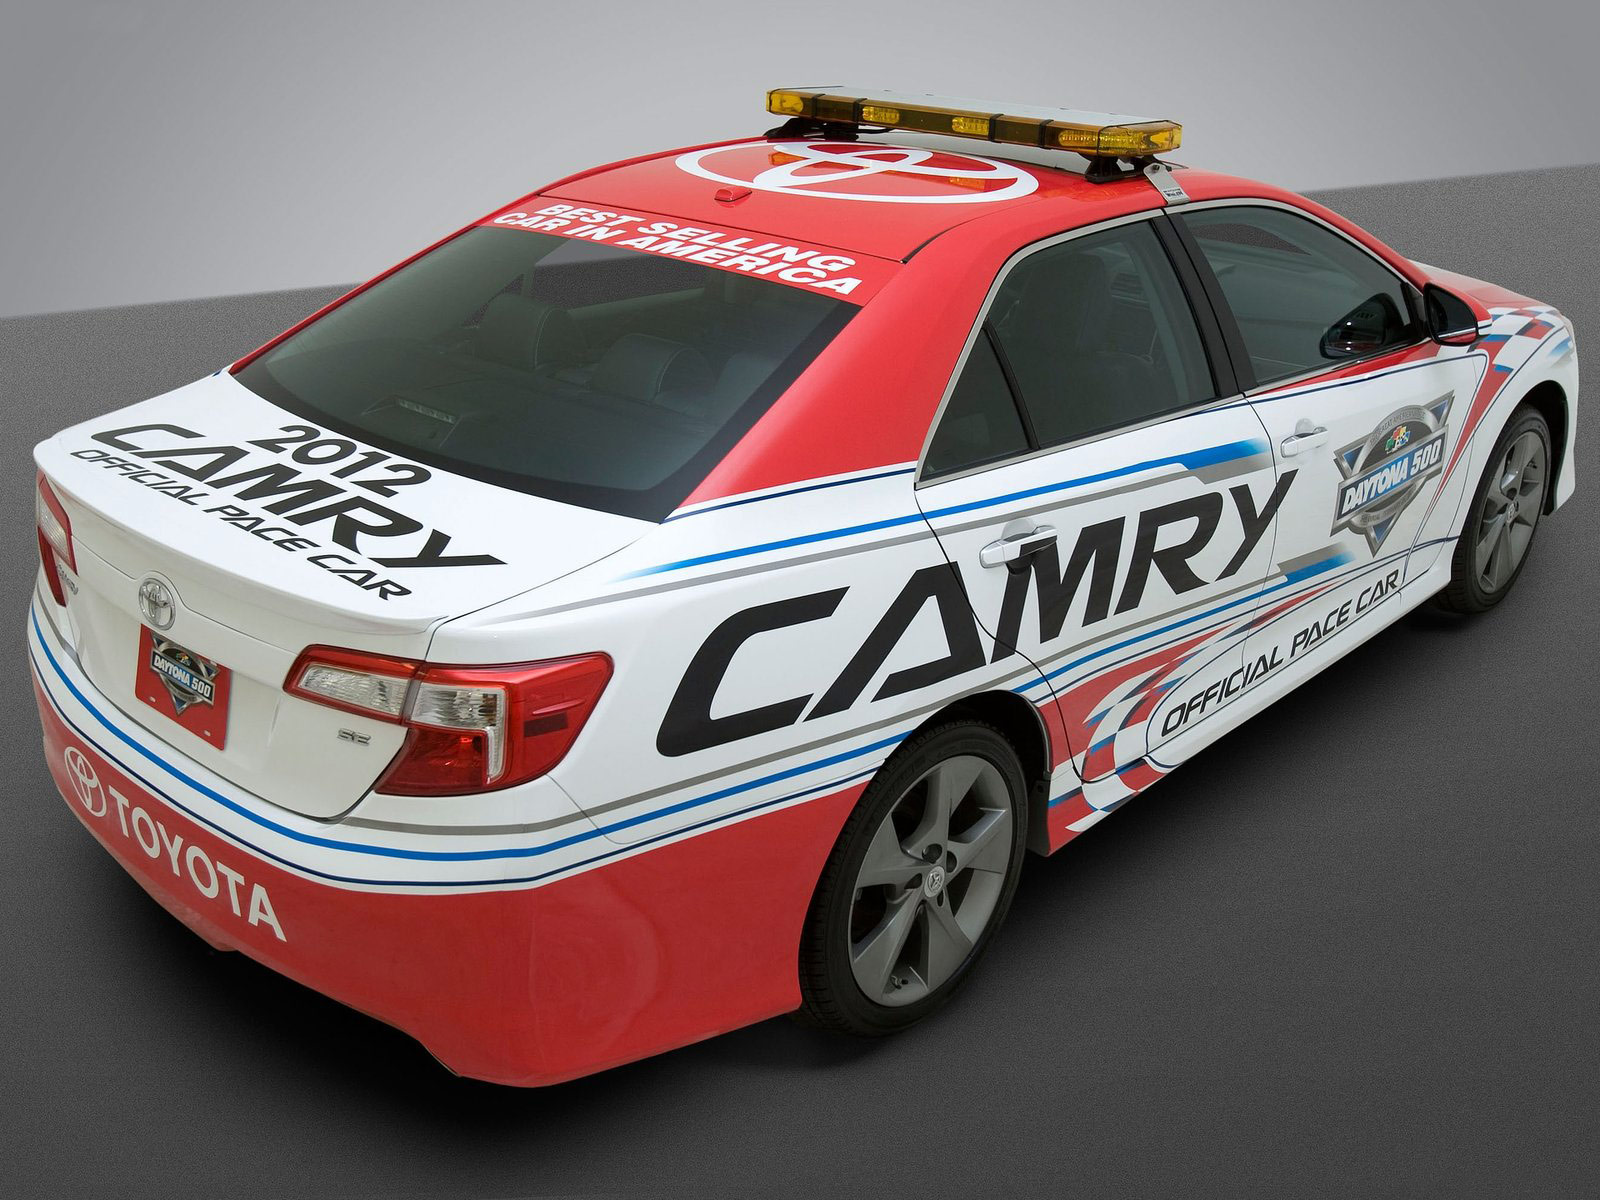 Toyota Camry Daytona Pace Car Wallpaper